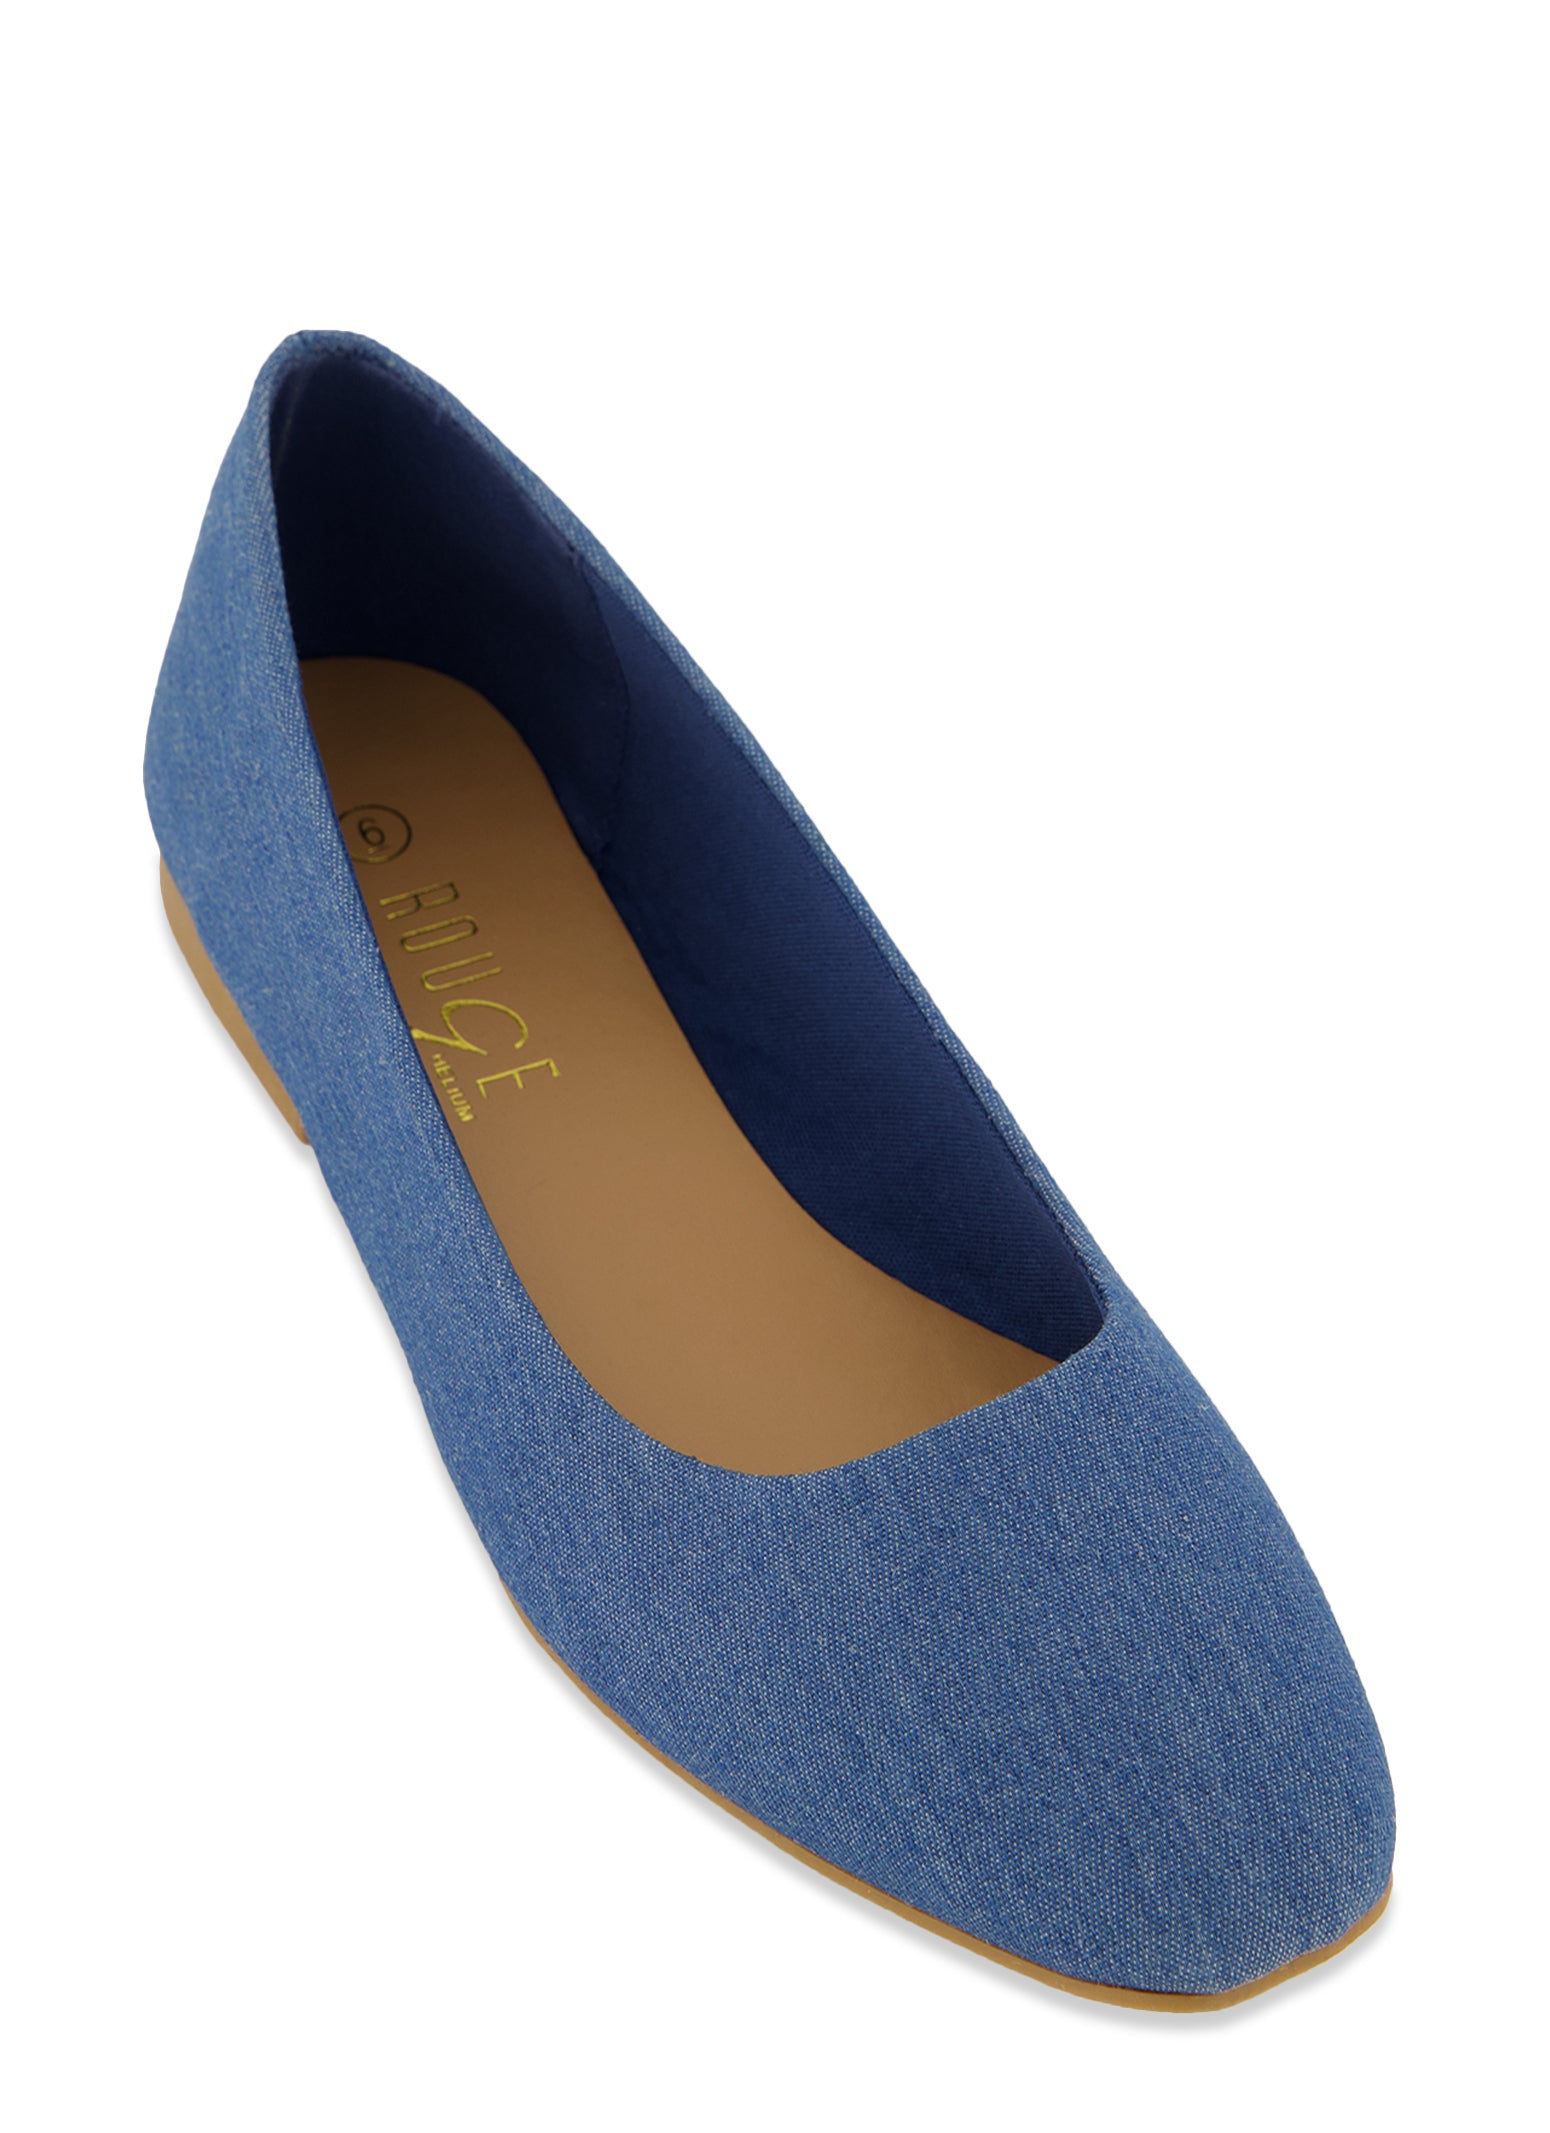 Blue Denim Flat Ankle Strap Sandals Frayed Jean Beach Sandals|FSJshoes